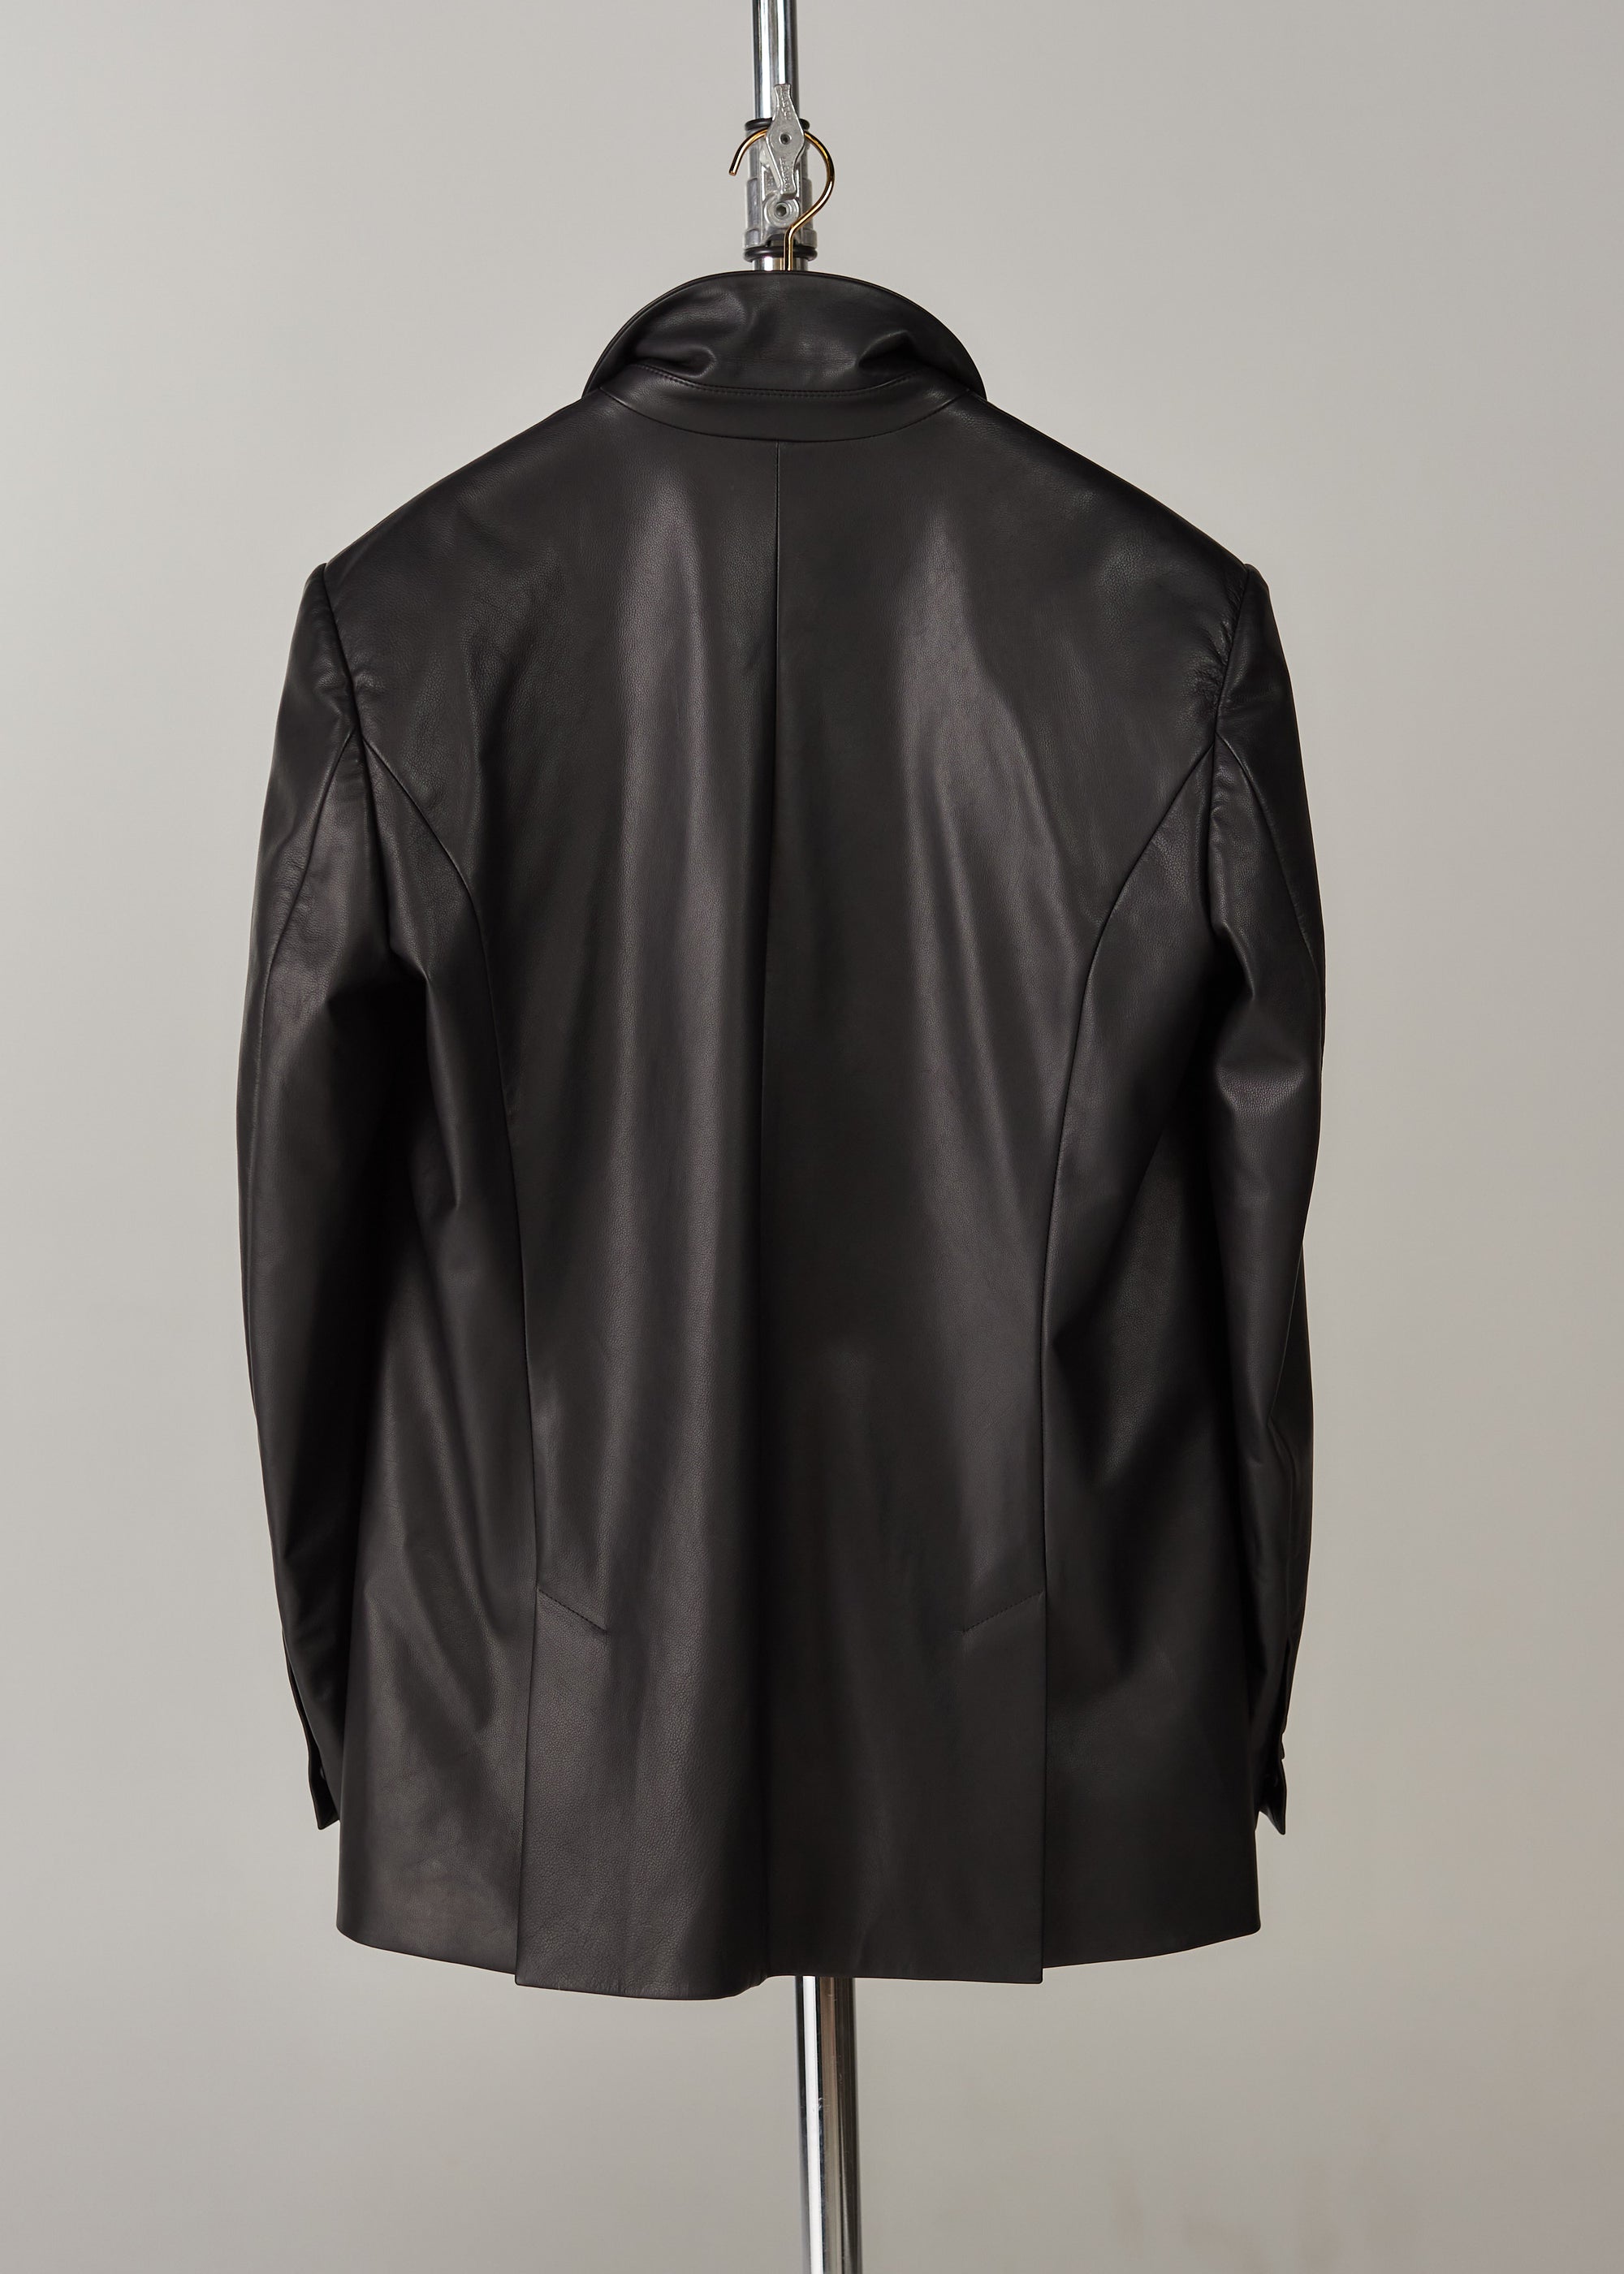 LNO Dinner Jacket - Black Calf Leather Size 42